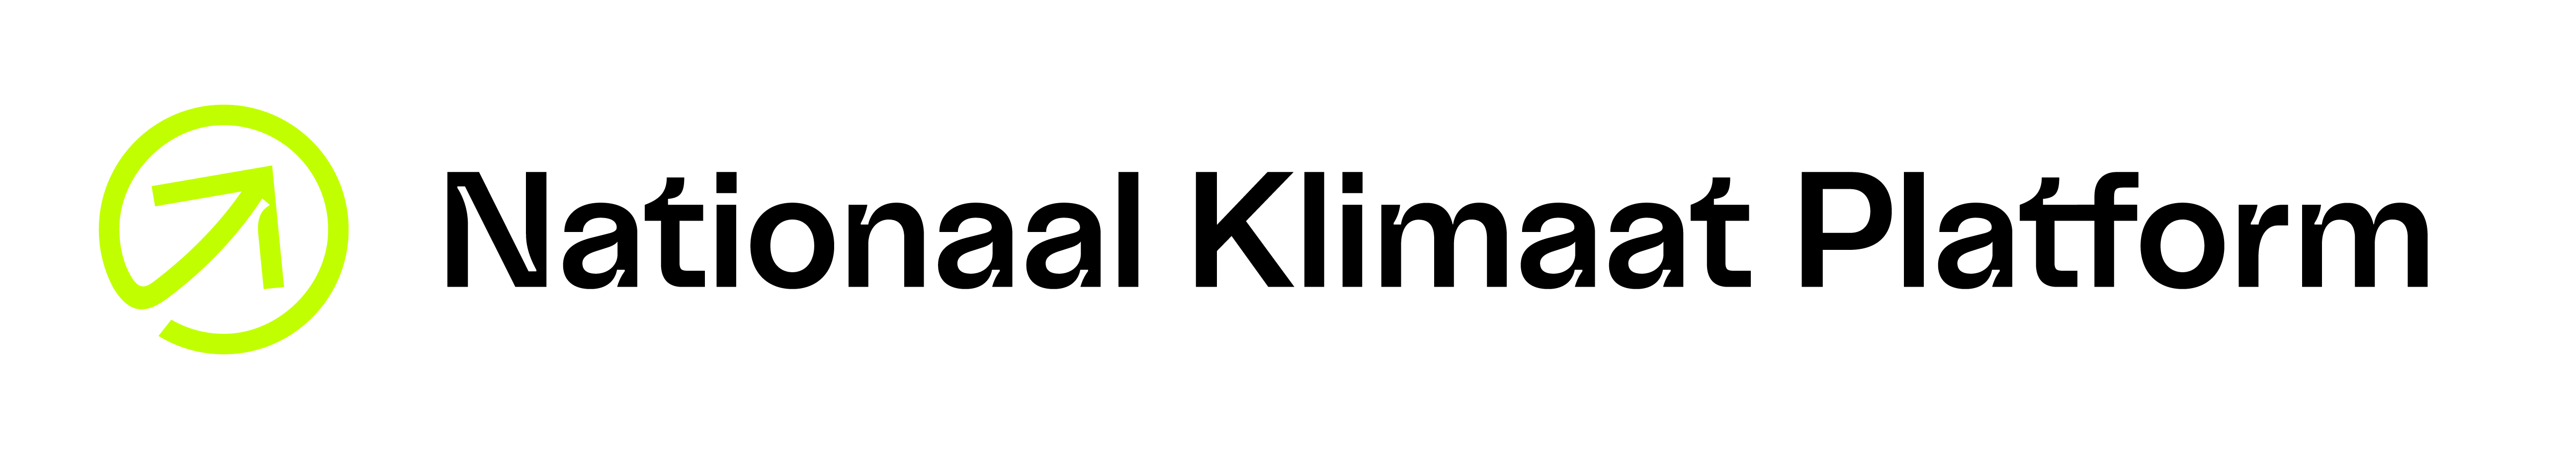 Nationaal Klimaat Platform logo